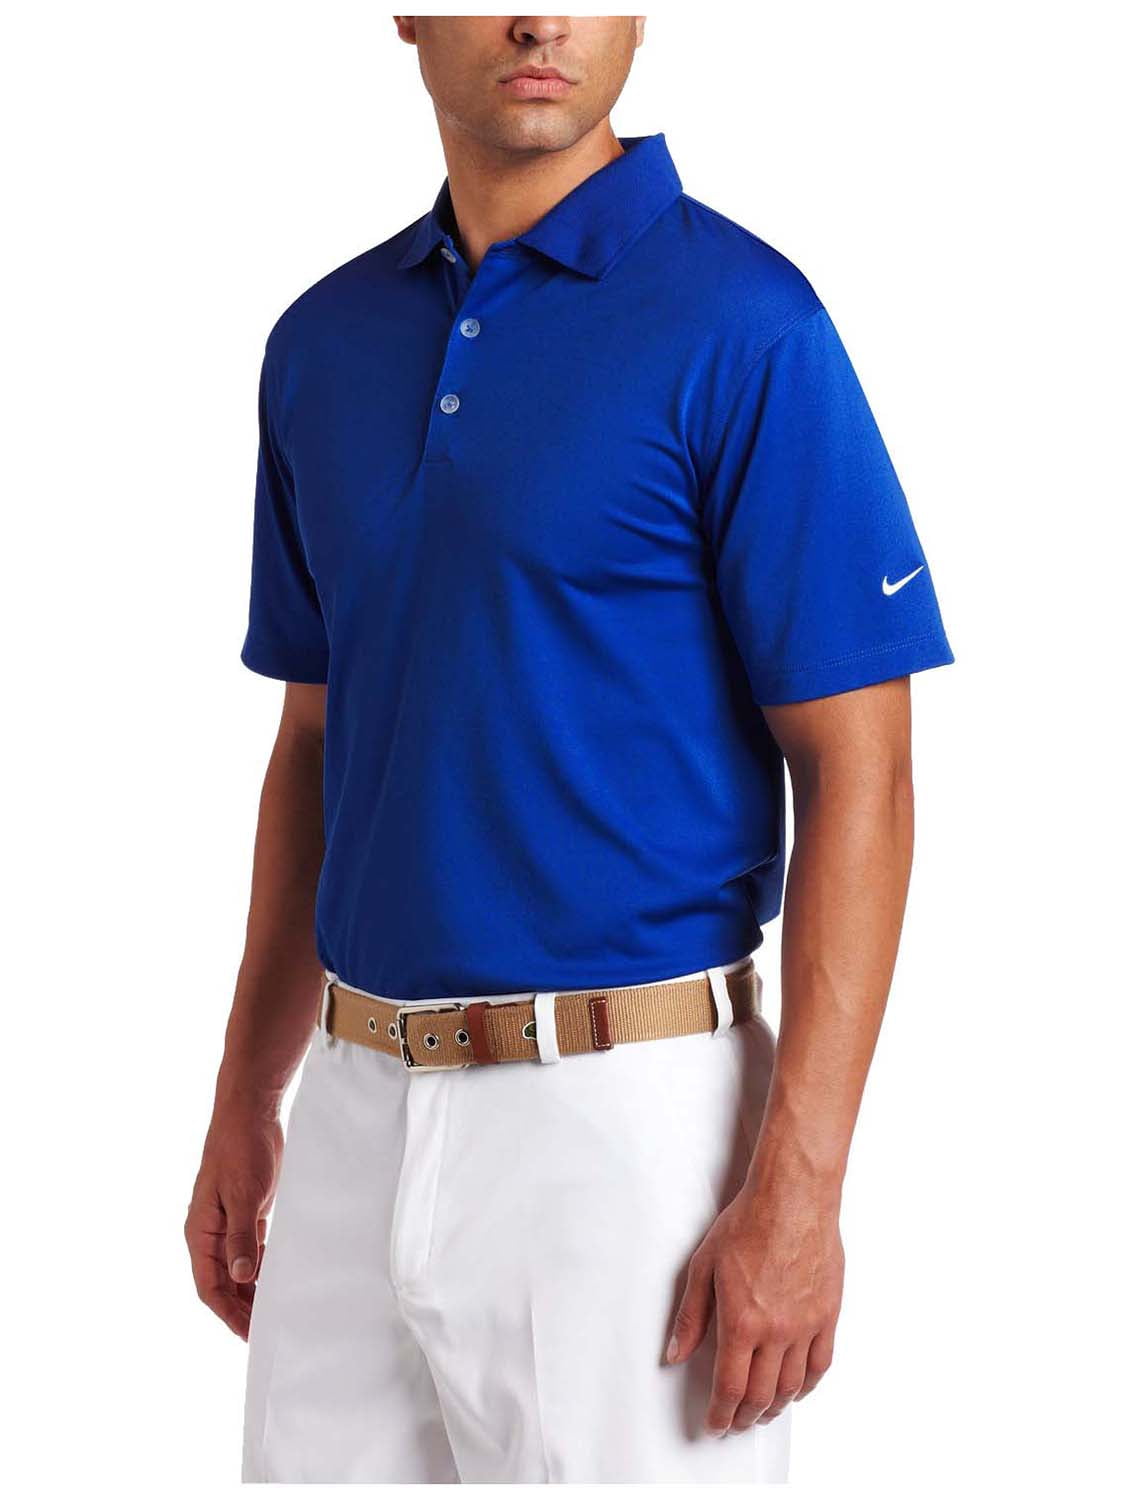 Nike Men's Dri-Fit Stretch UV Tech Golf Polo Shirt - Walmart.com ...